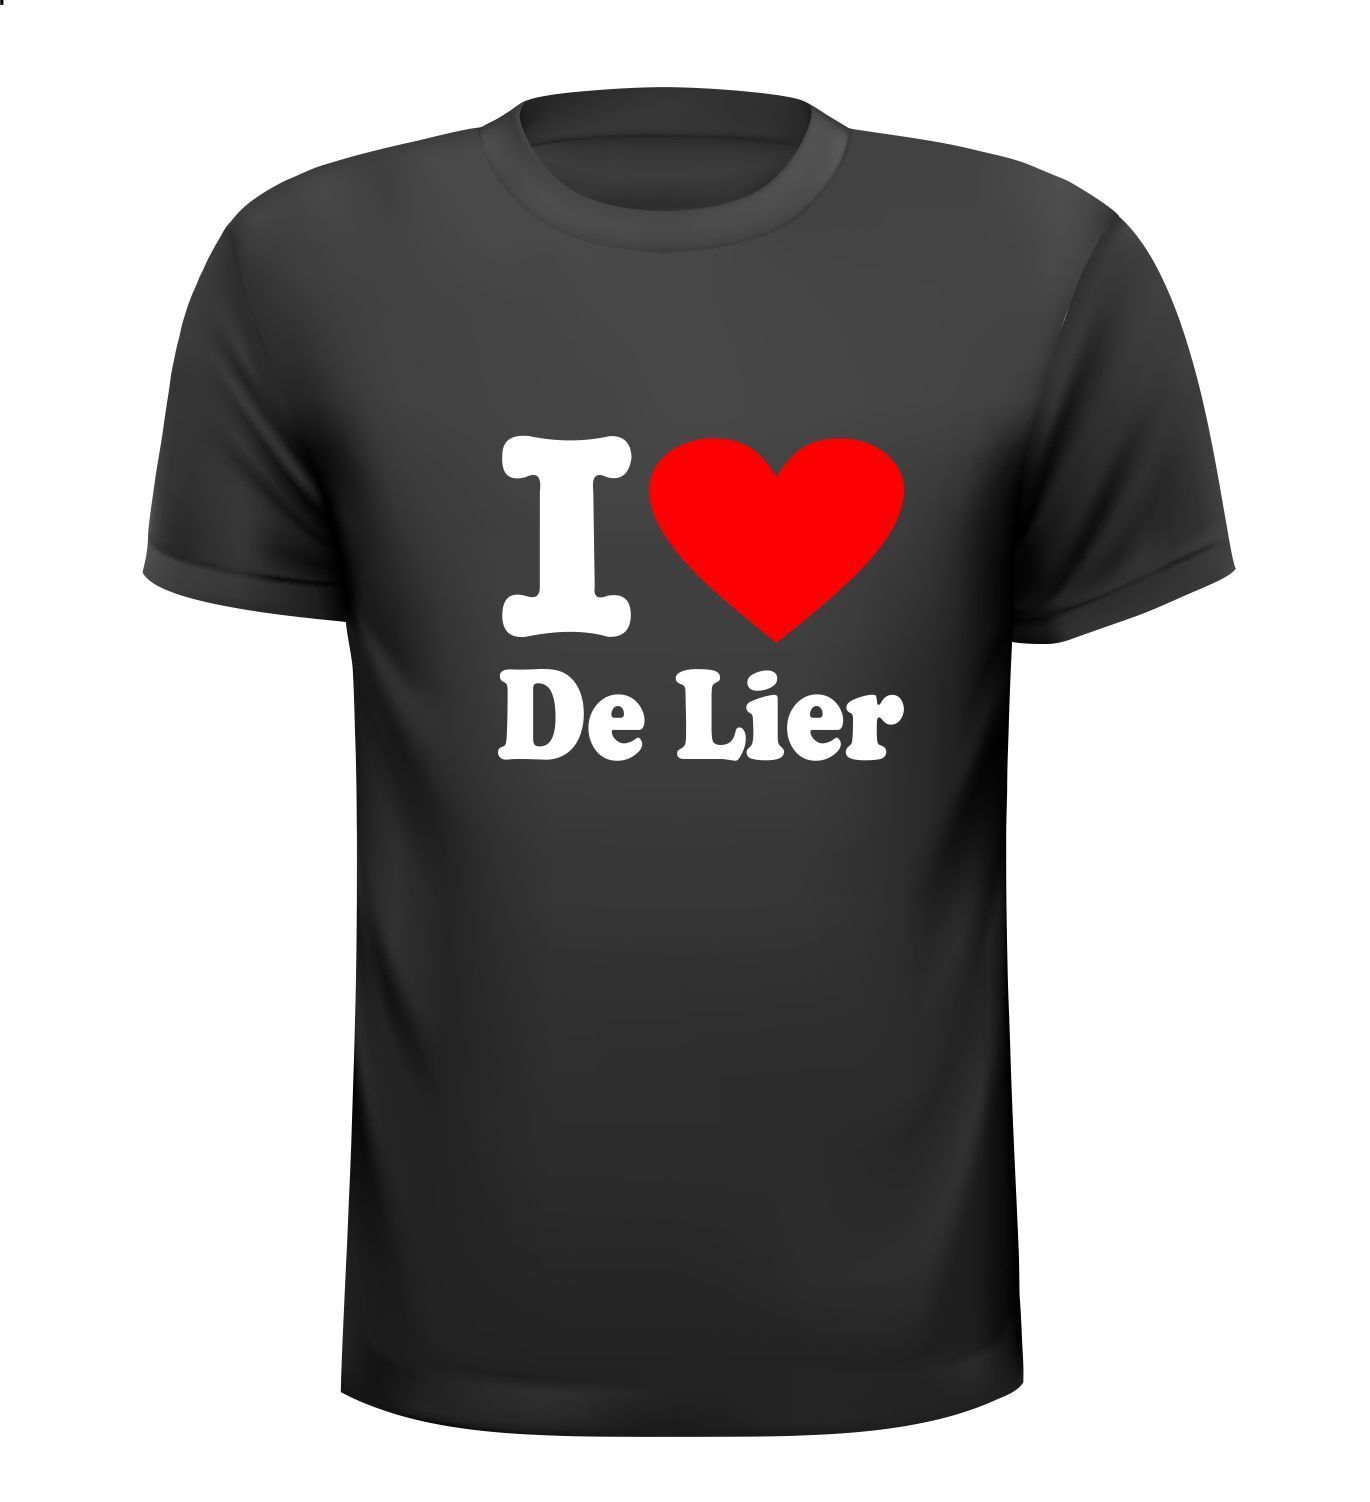 I love De Lier T-shirt houden van dropje De Lier